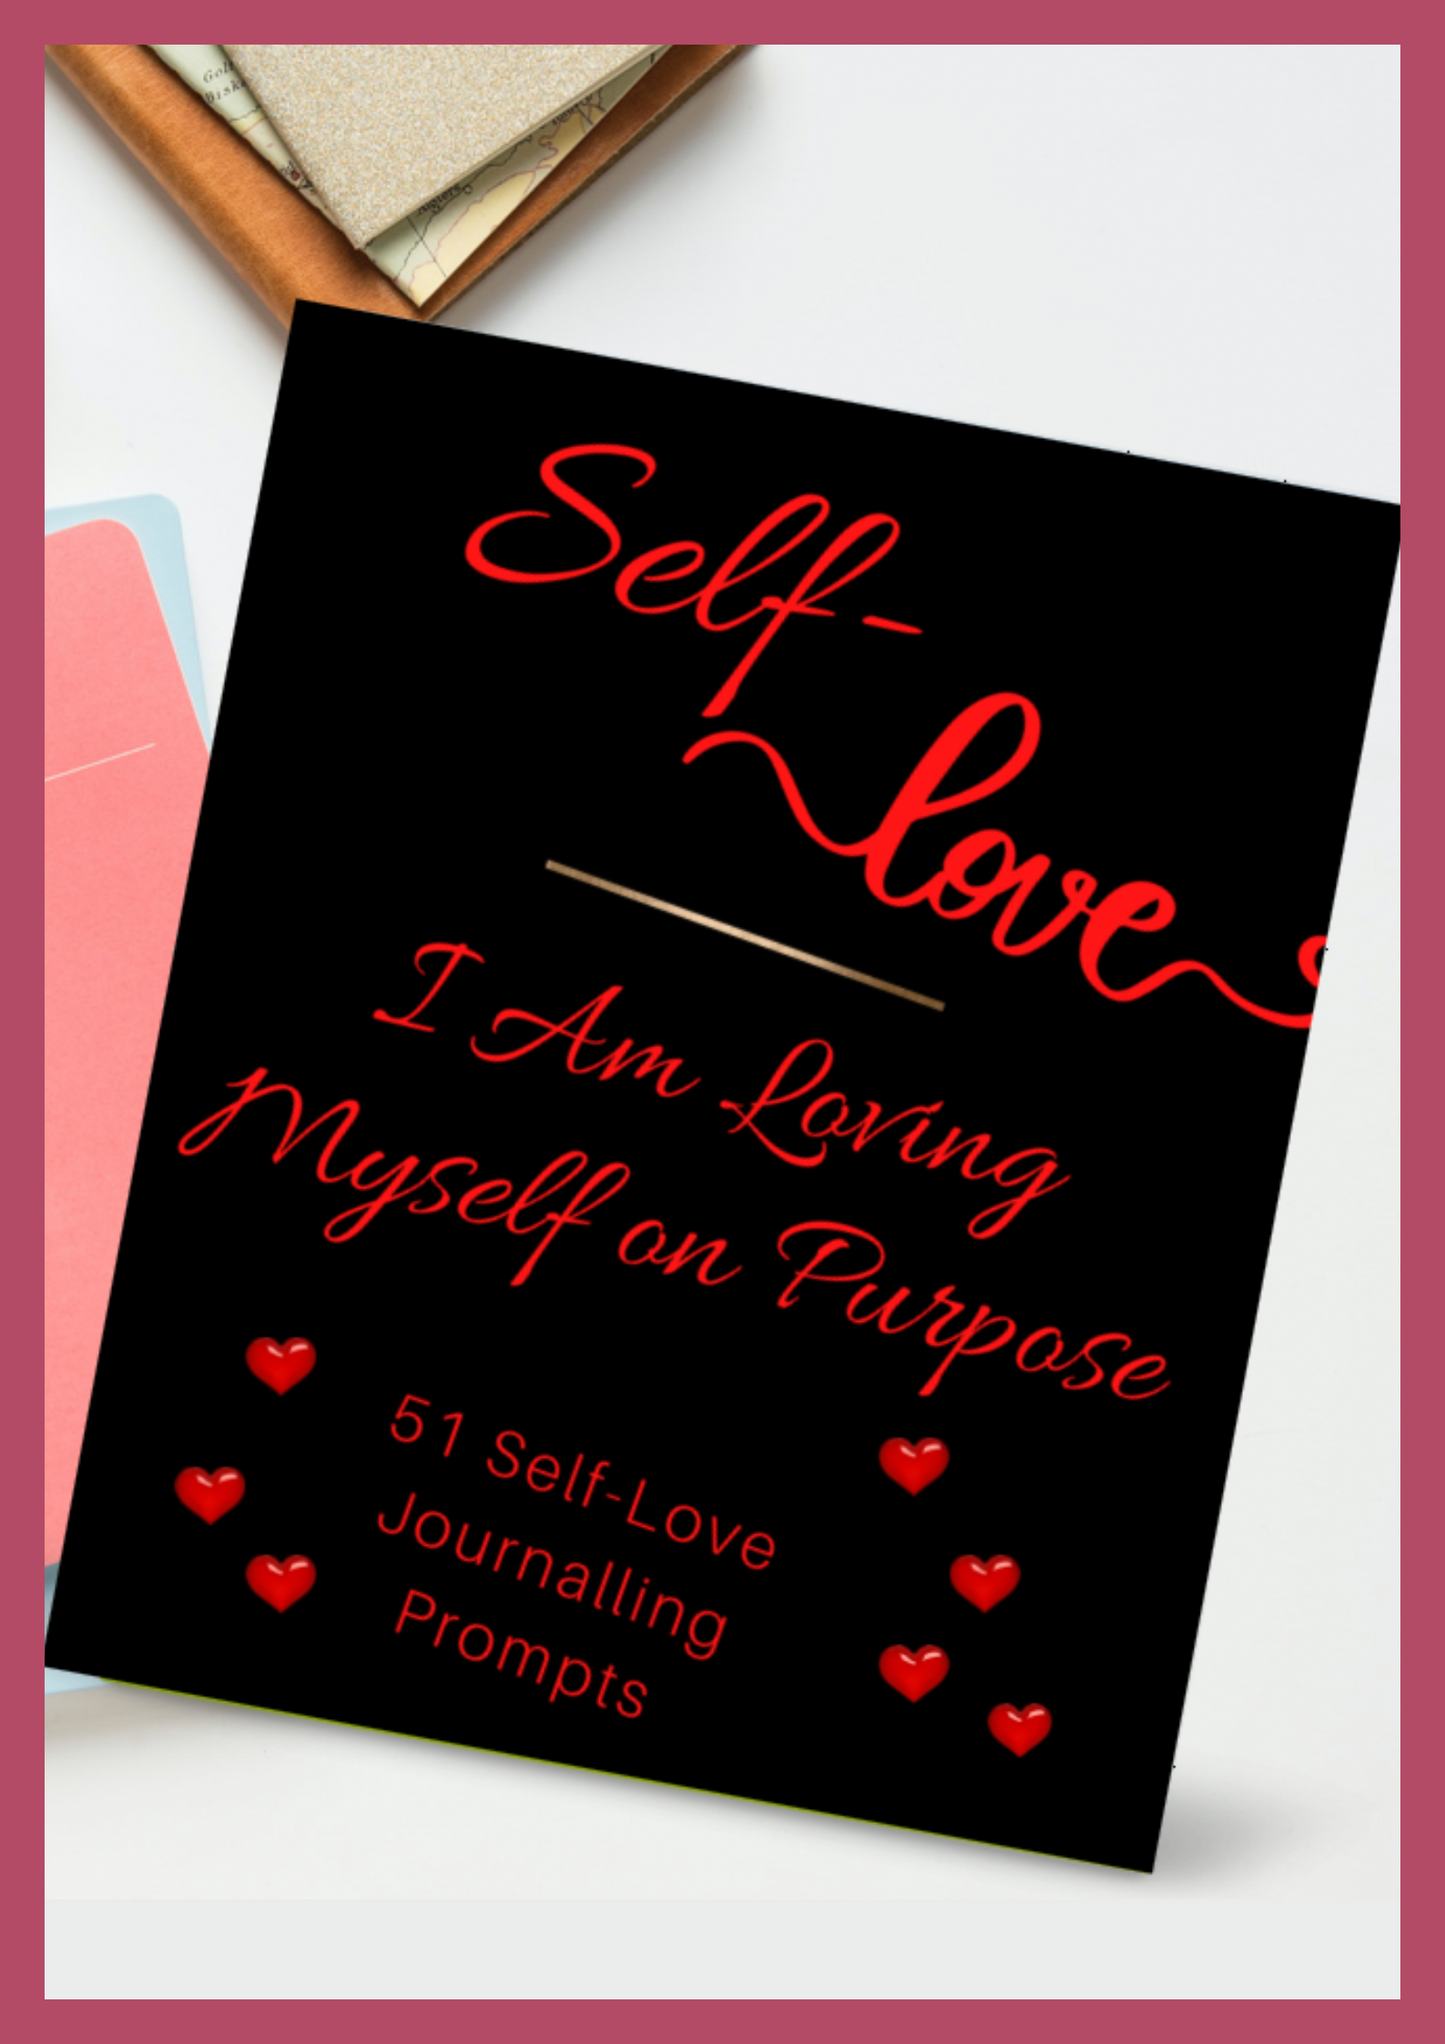 Self Love - Loving Myself on Purpose Journal